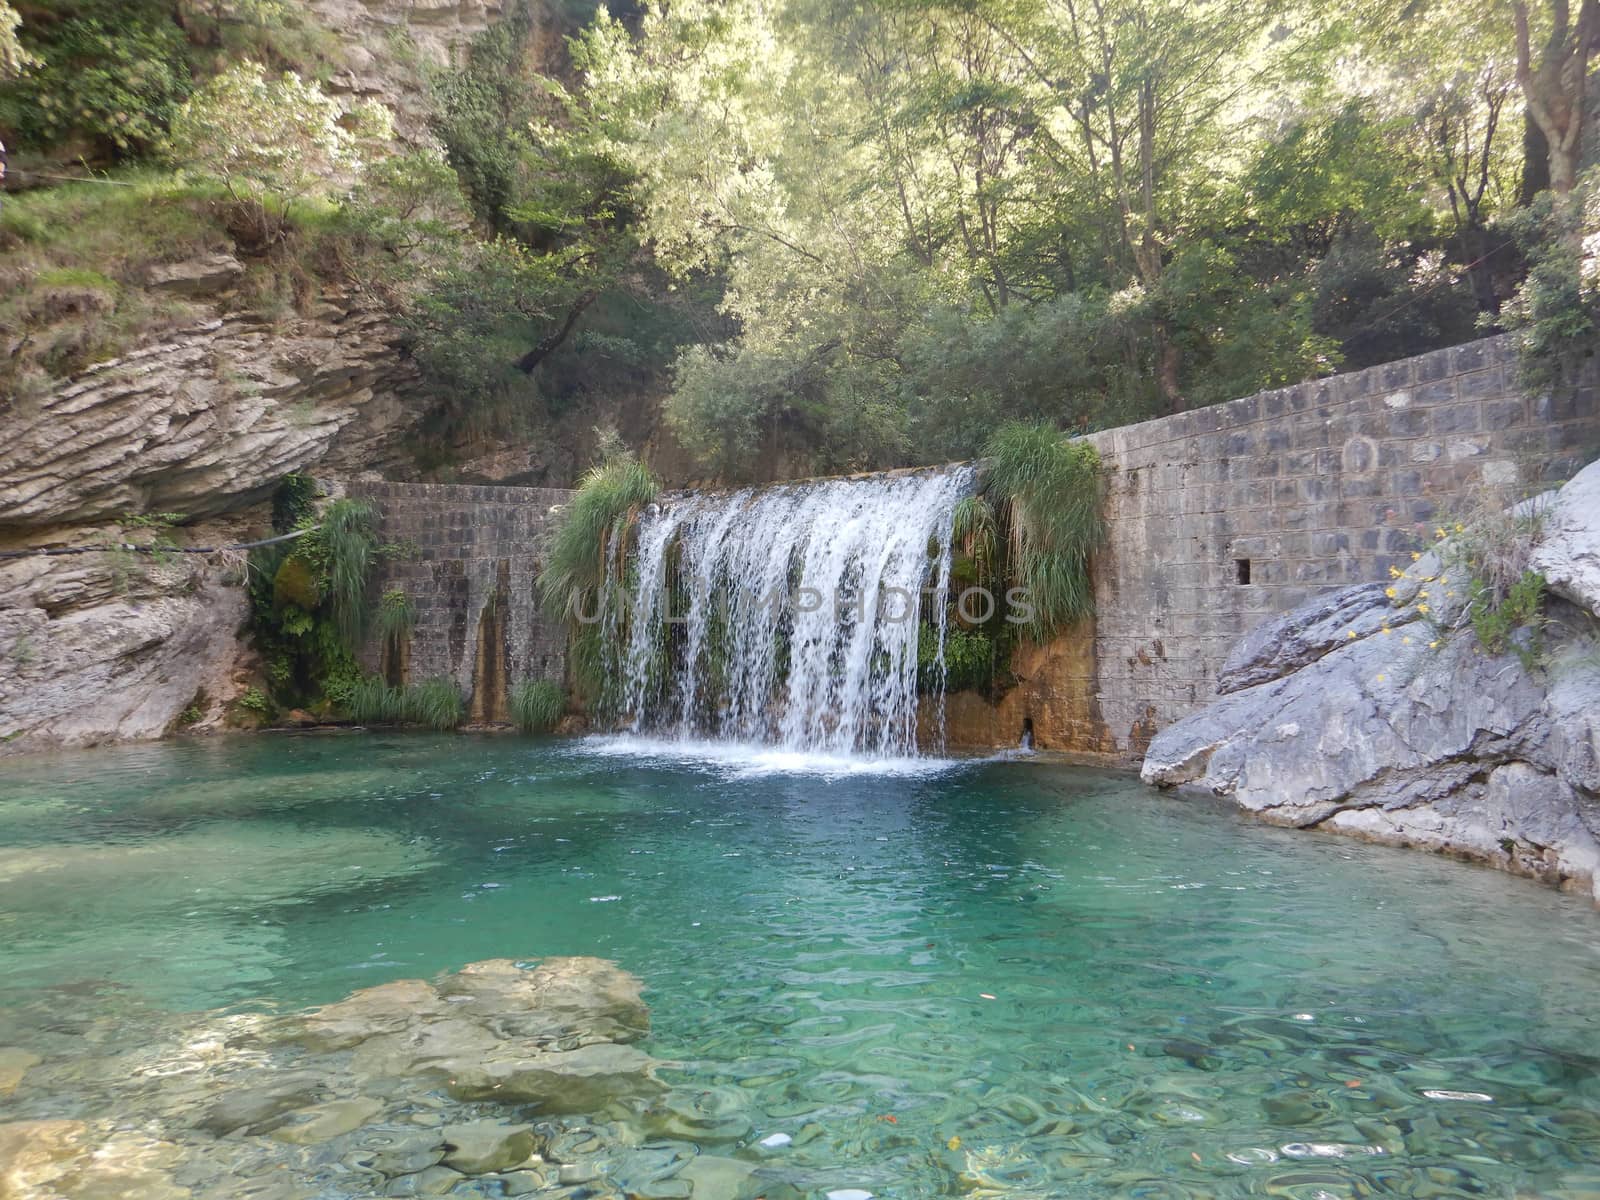 A waterfall in the Rio Barbaira stream along the Nervia Valley, Rocchetta Nervina, Liguria - Italy